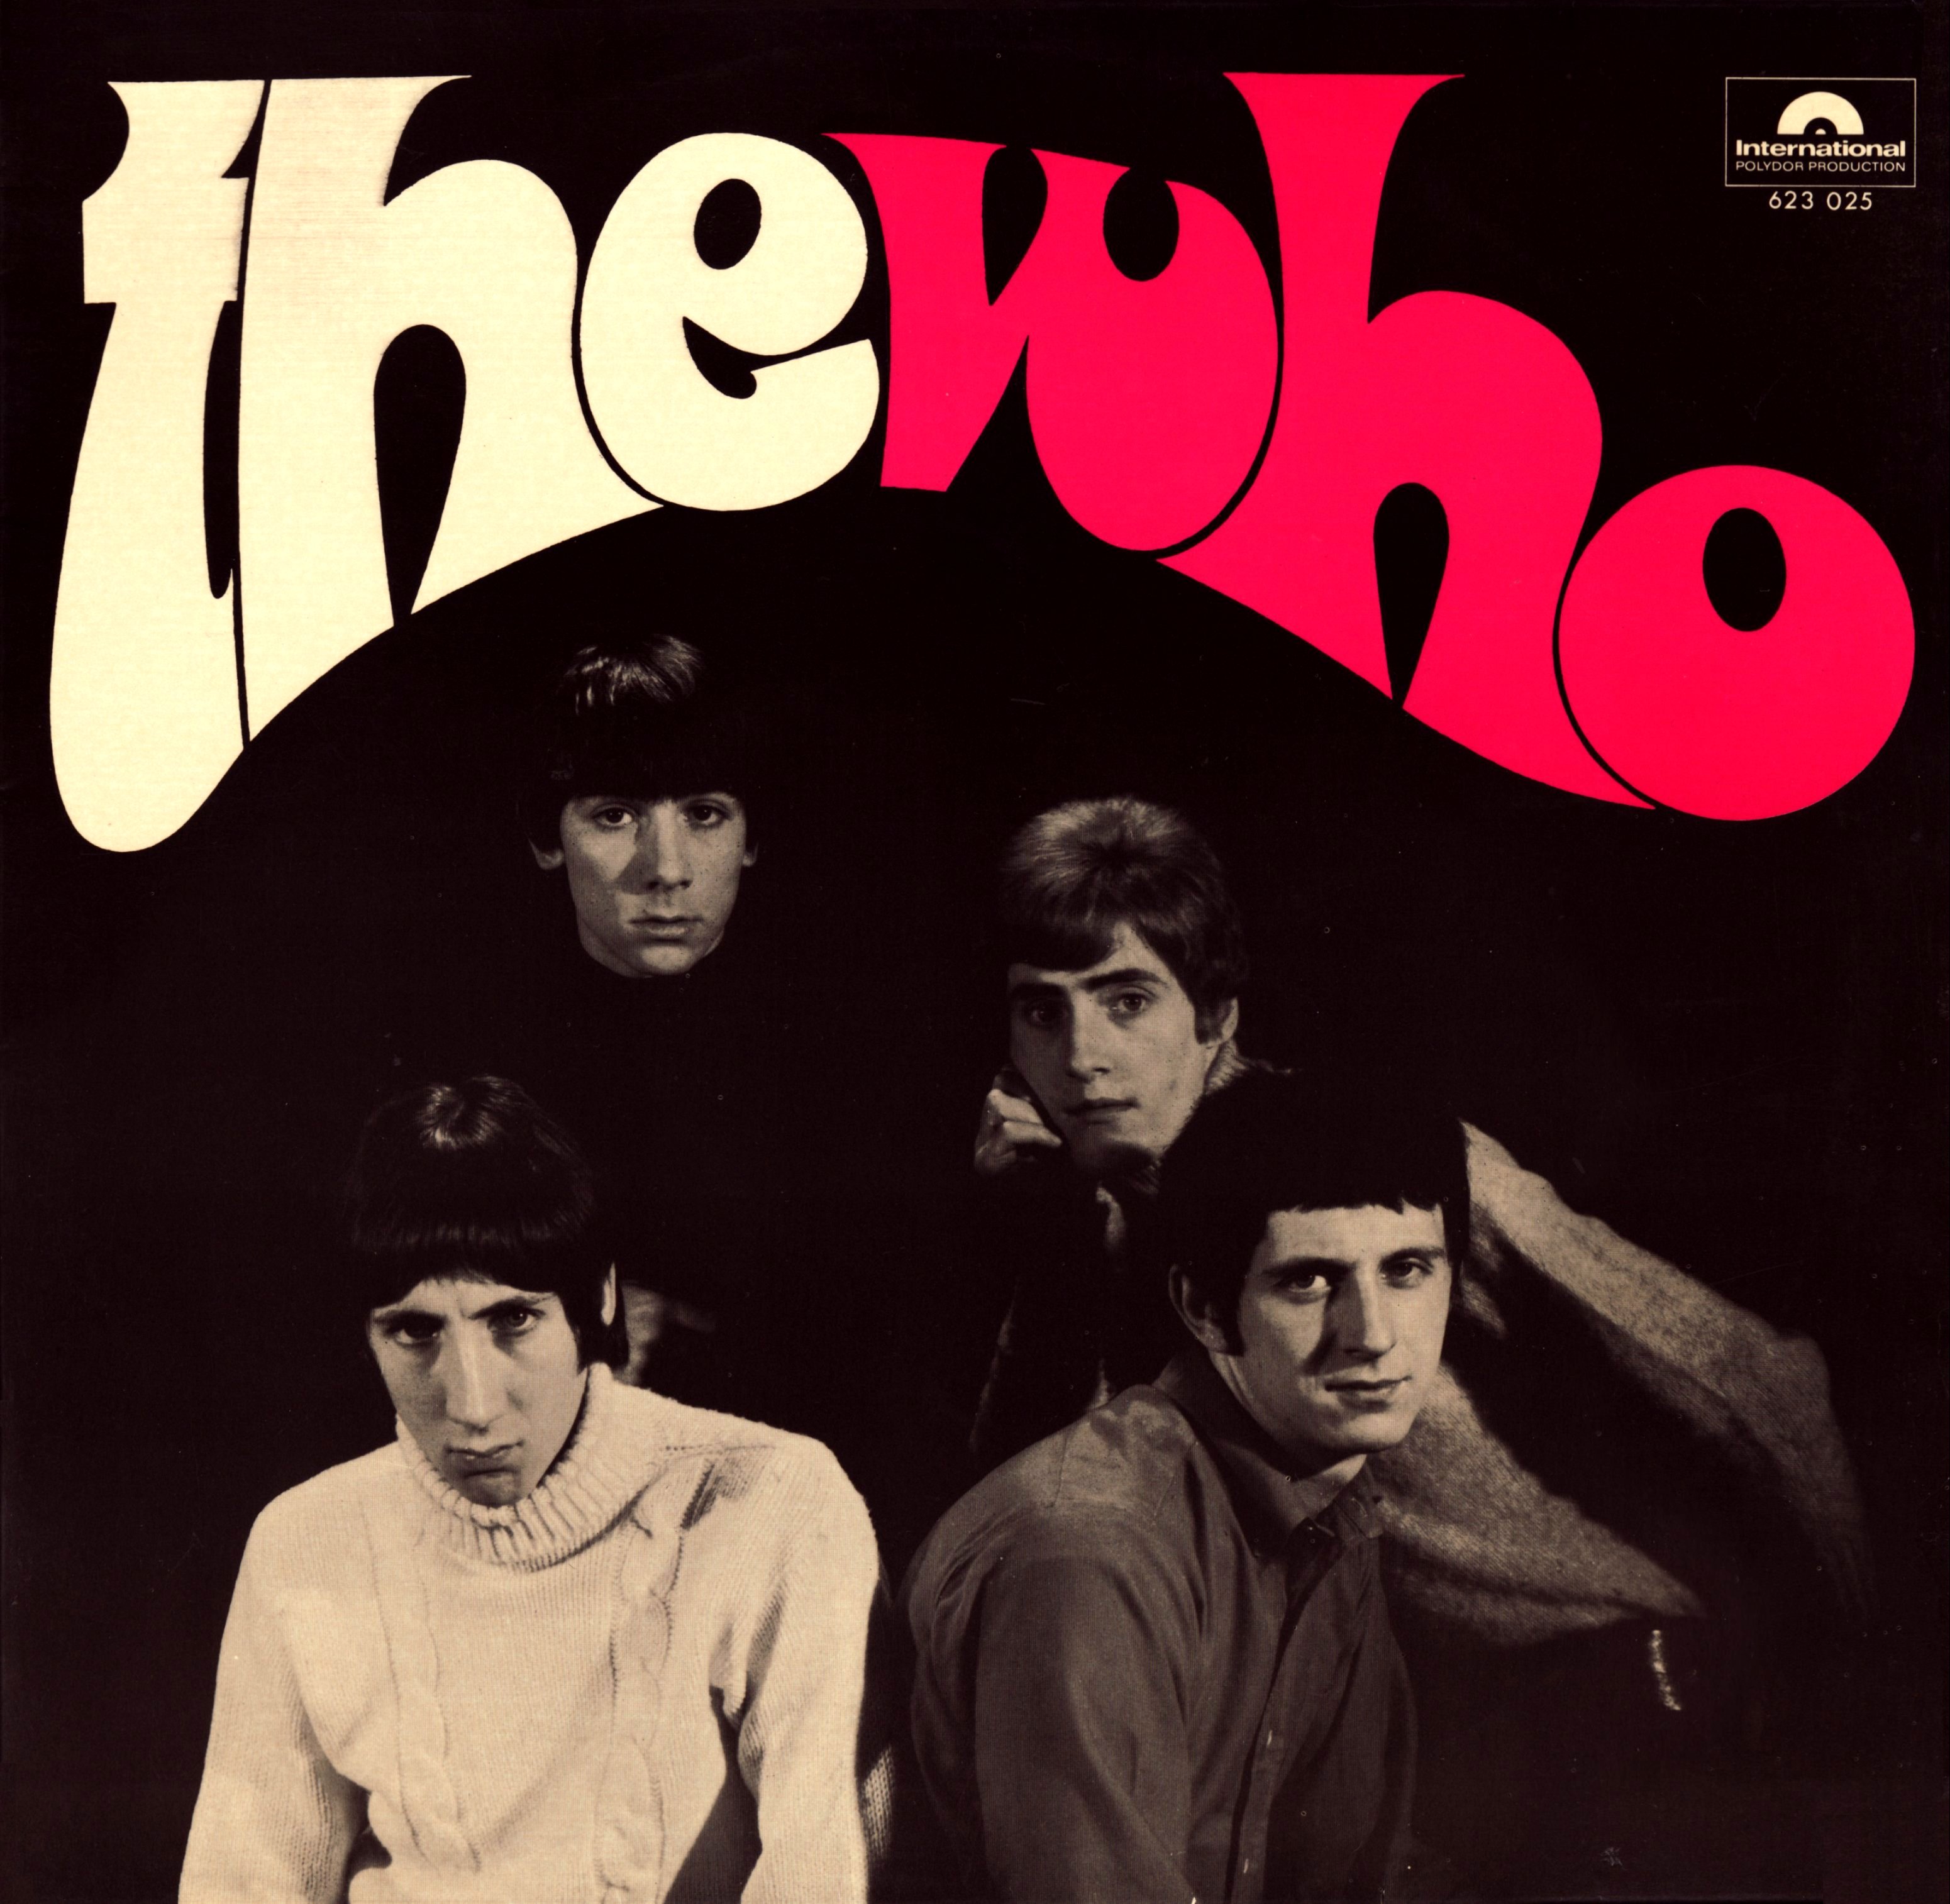 The who collection the who. The who Band. The who обложки. Группа the who альбомы. The who обложки альбомов.